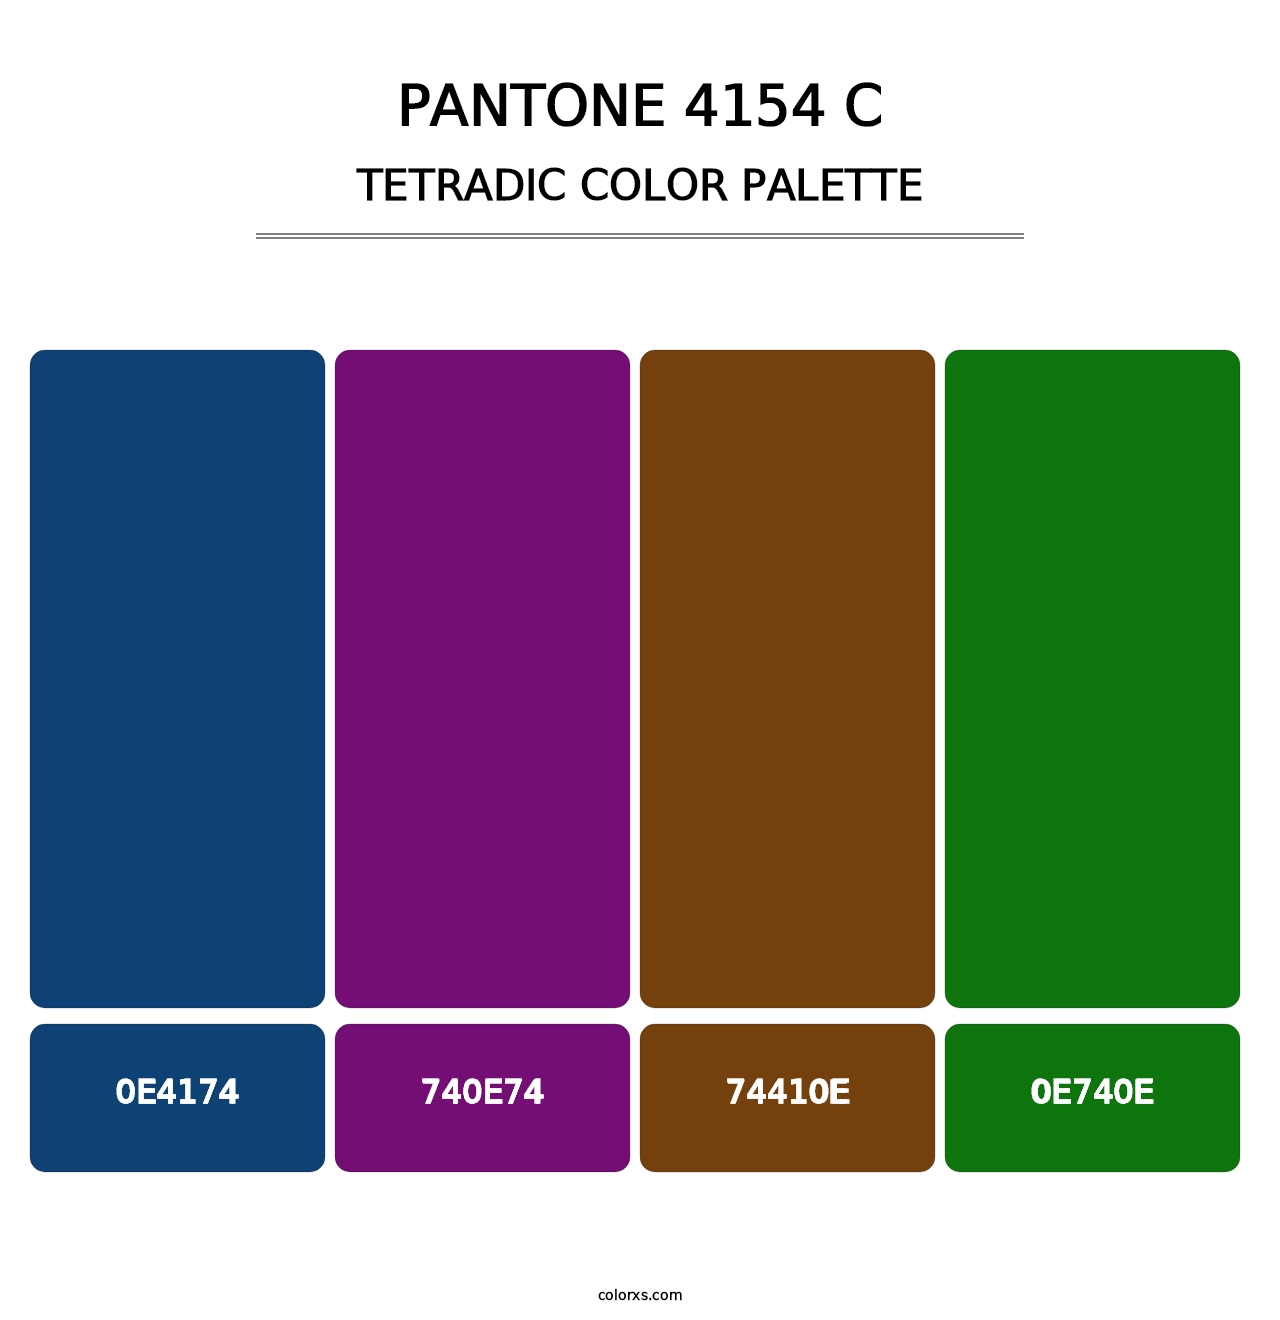 PANTONE 4154 C - Tetradic Color Palette